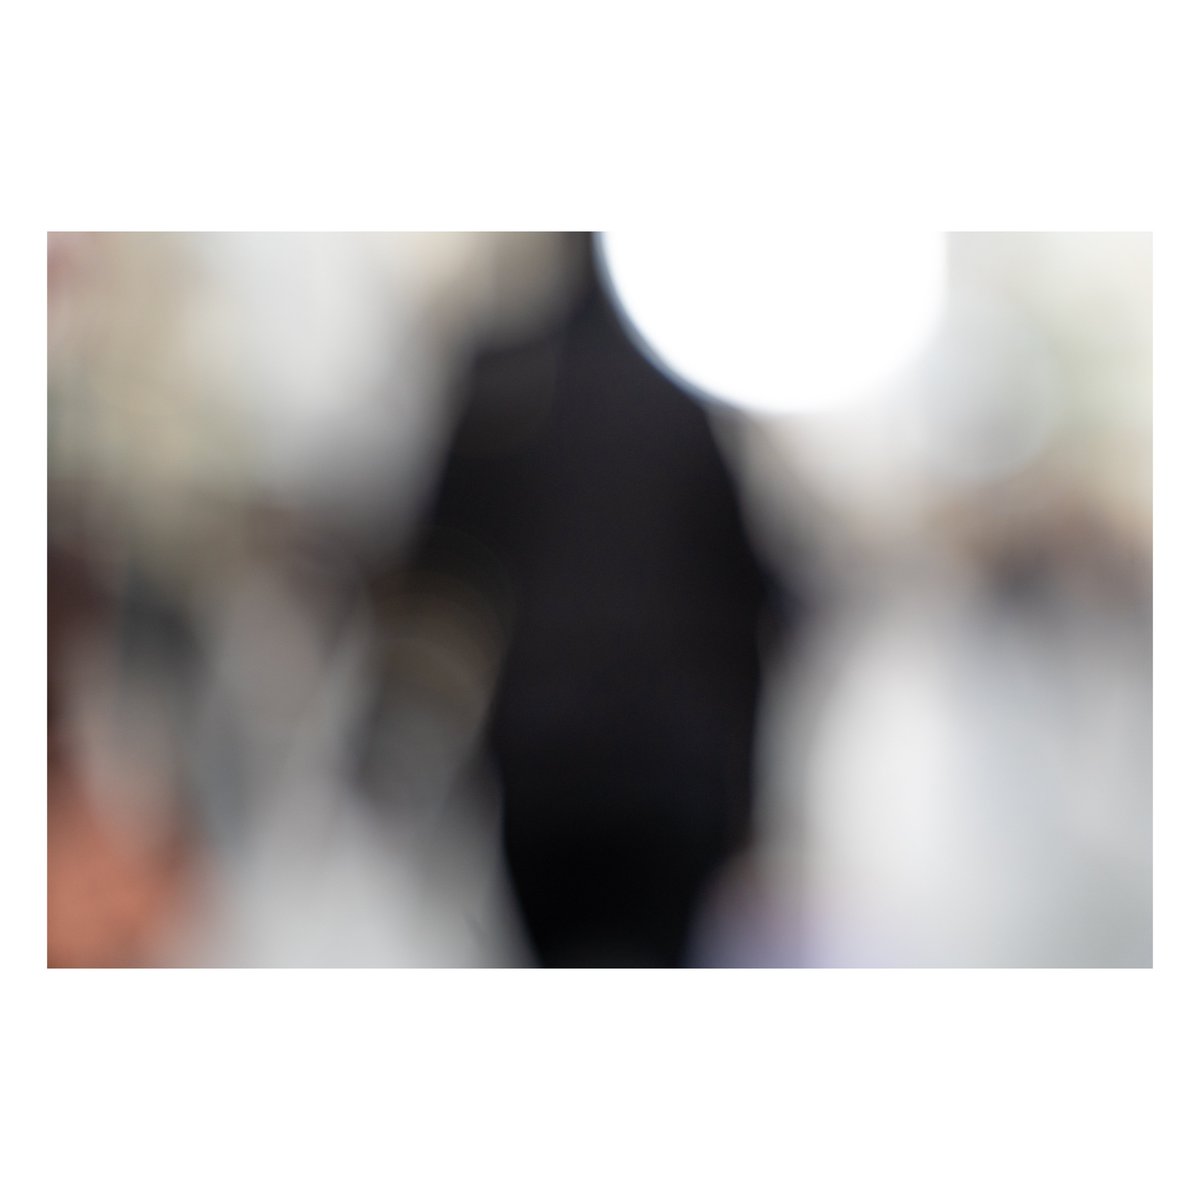 🔶 Out of focus silhouette

Février 2020.

#abstract
#abstractphotography
#minimalism
#minimalphotography
#streetphotography #colorphotography
#streetphoto_color
#belgiumphotographer
#belgiumphotography
#belgium
#sonyalpha
#sonya7iii
#benlorthi